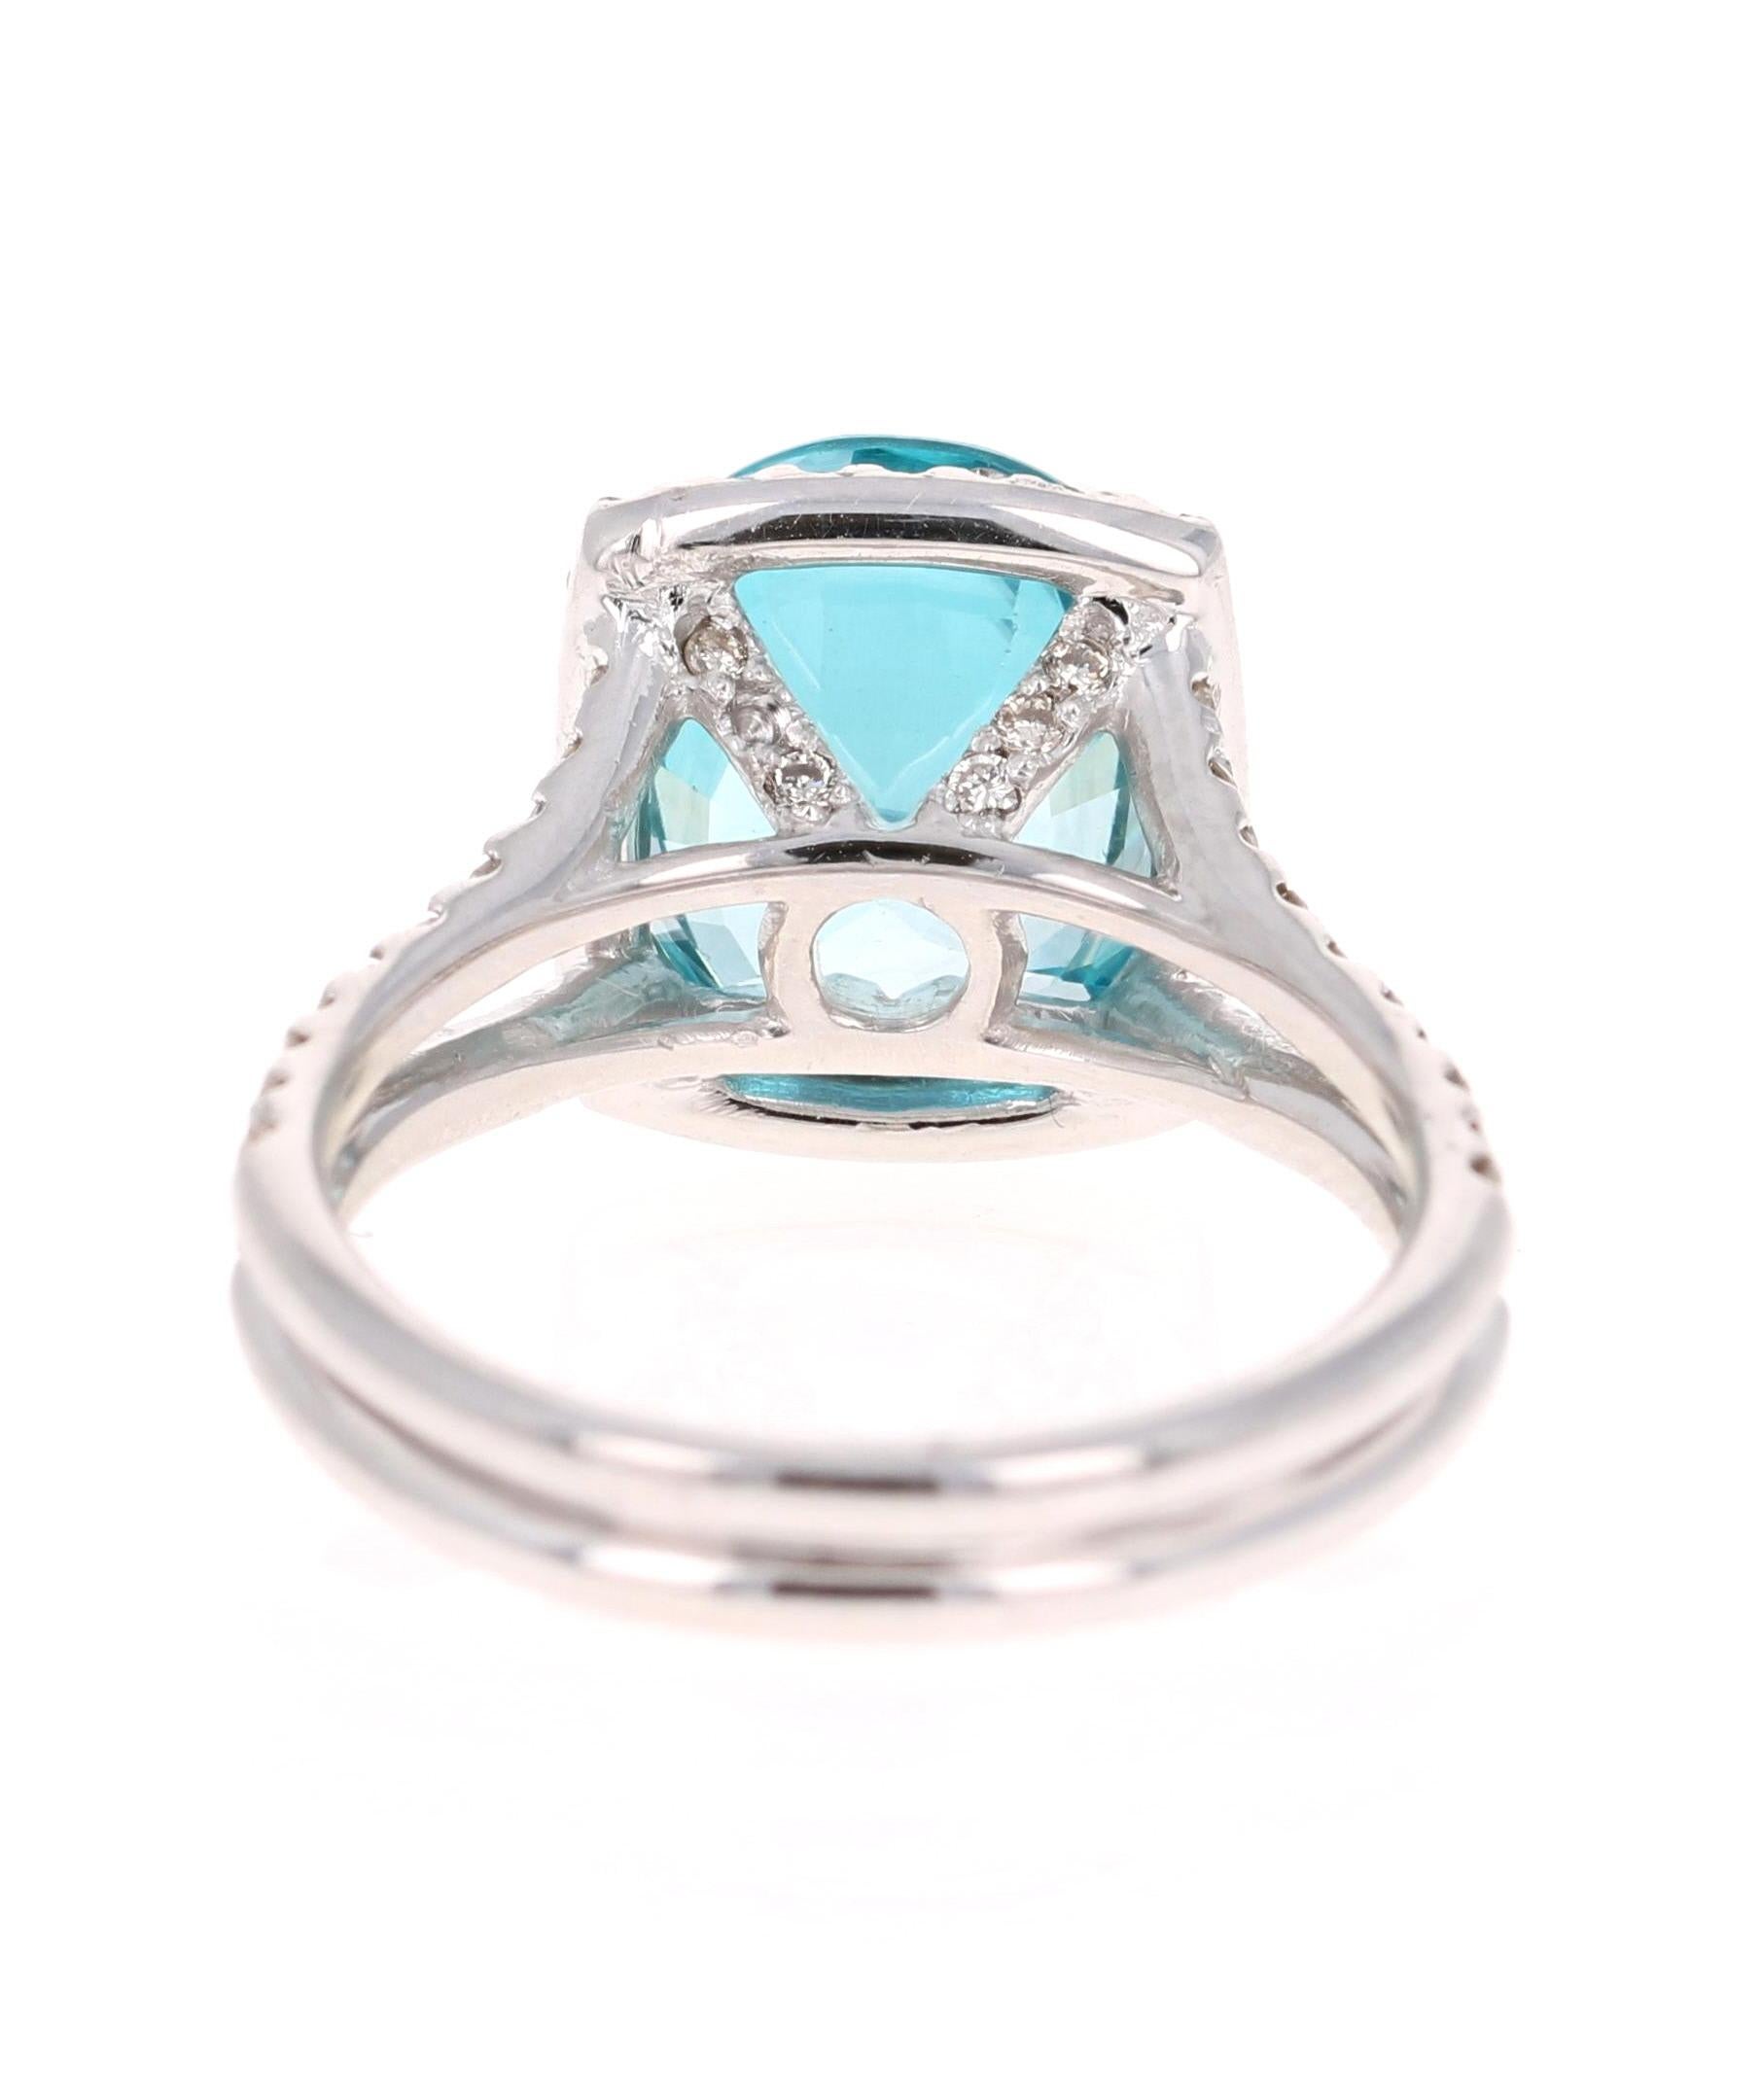 Oval Cut 7.49 Carat Blue Zircon Diamond 14 Karat White Gold Ring For Sale